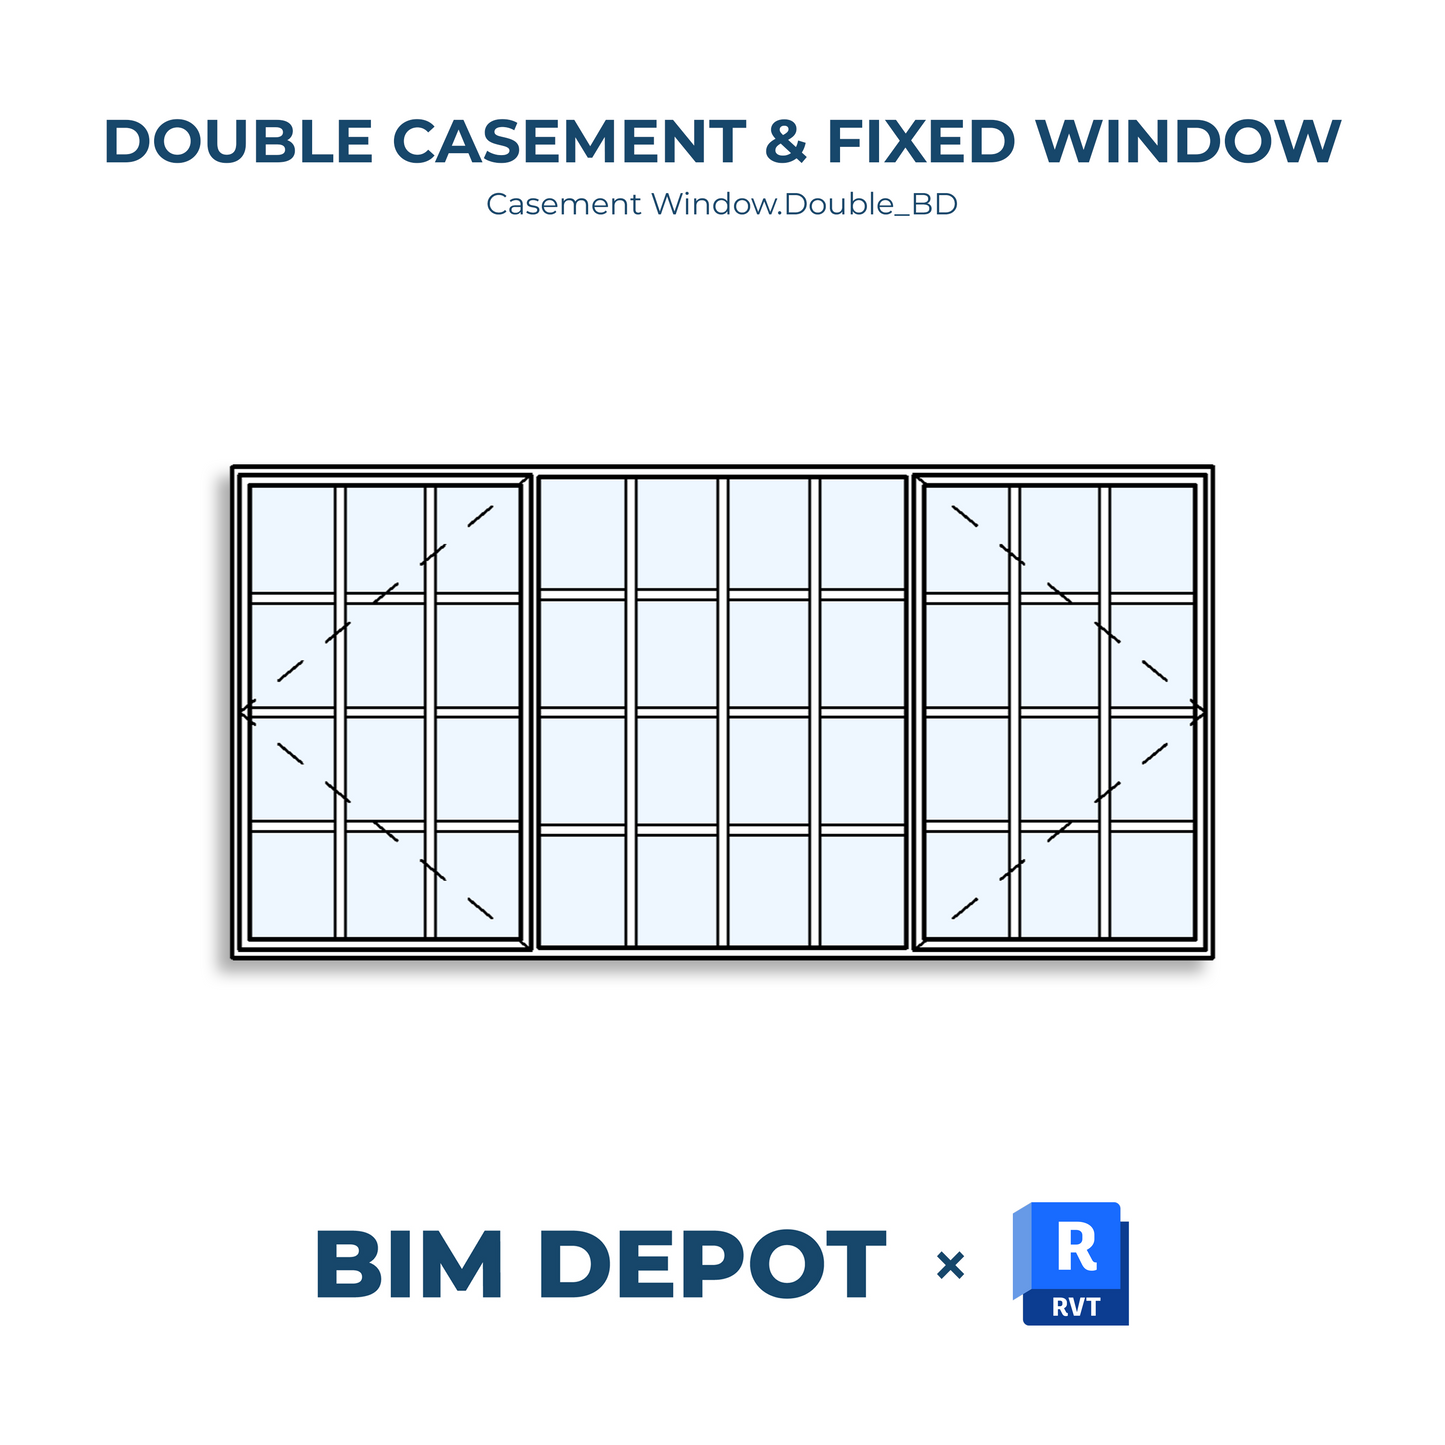 Double Casement & Fixed Window